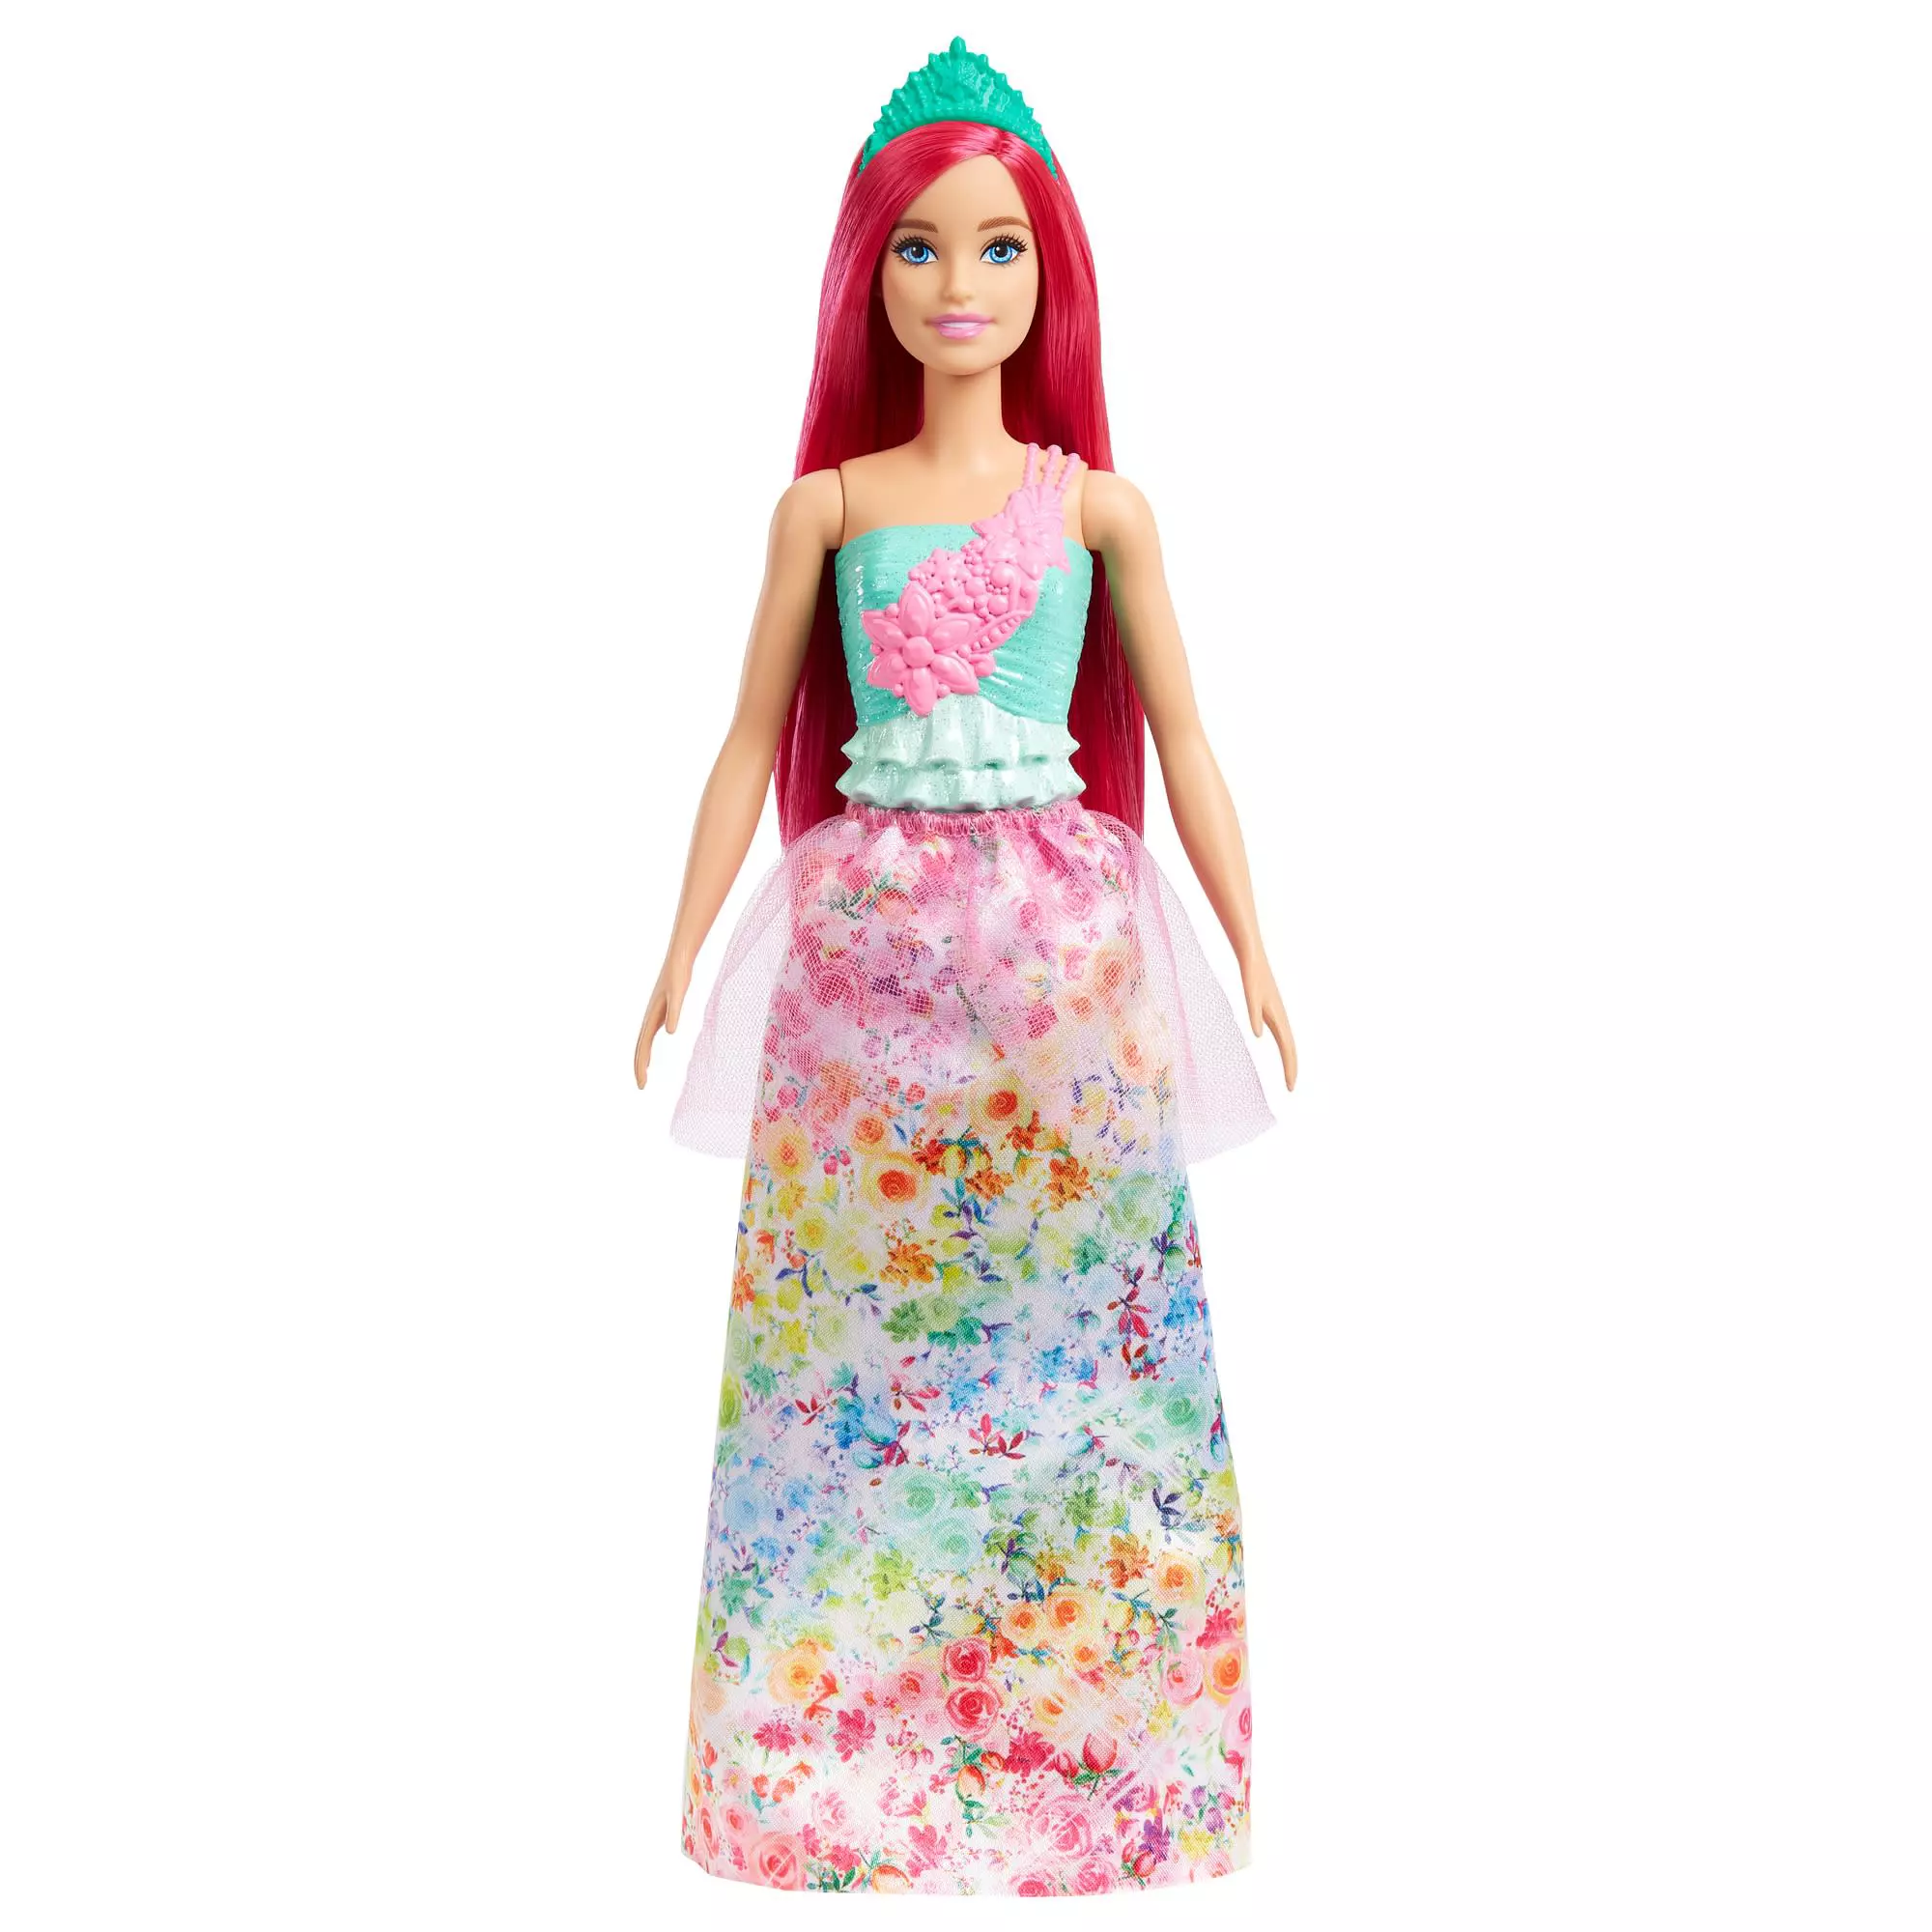 Barbie Dreamtopia Princess Doll Hgr15